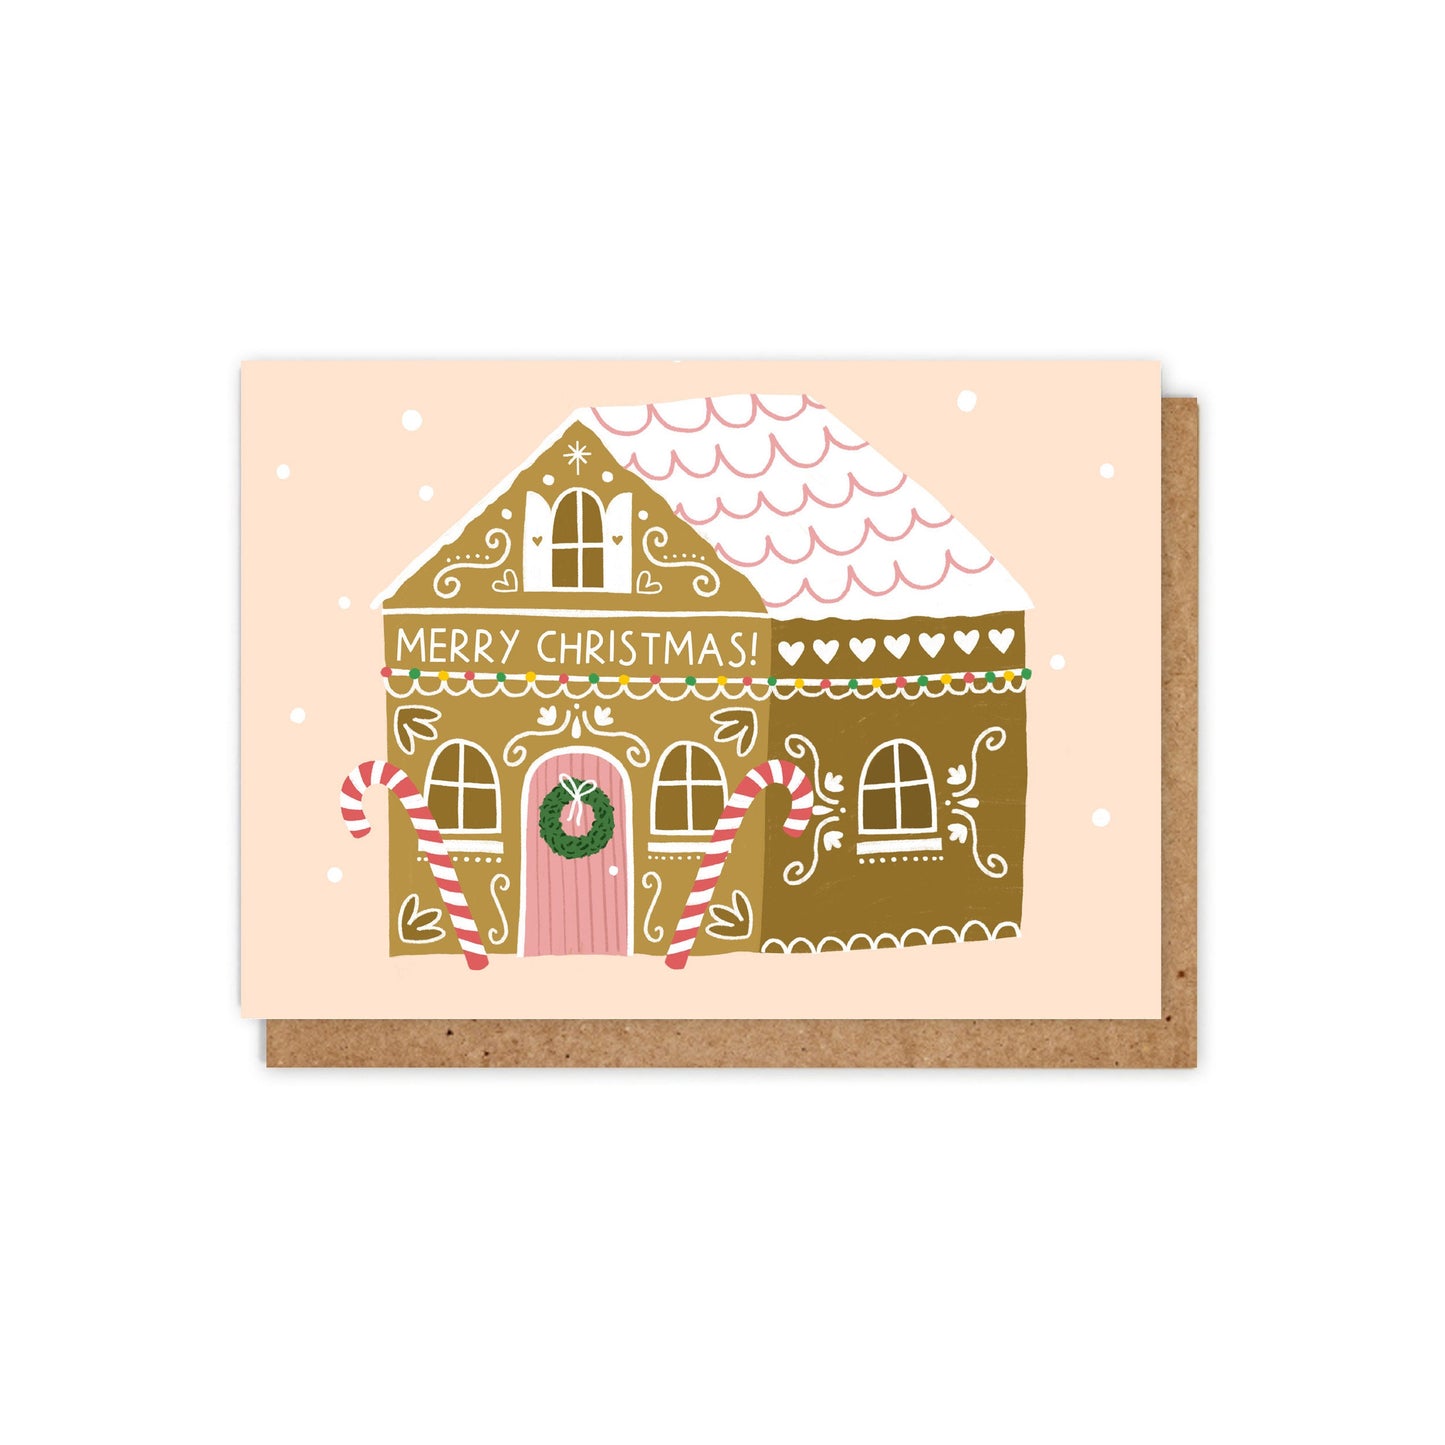 Merry Christmas!' Gingerbread house Christmas Card